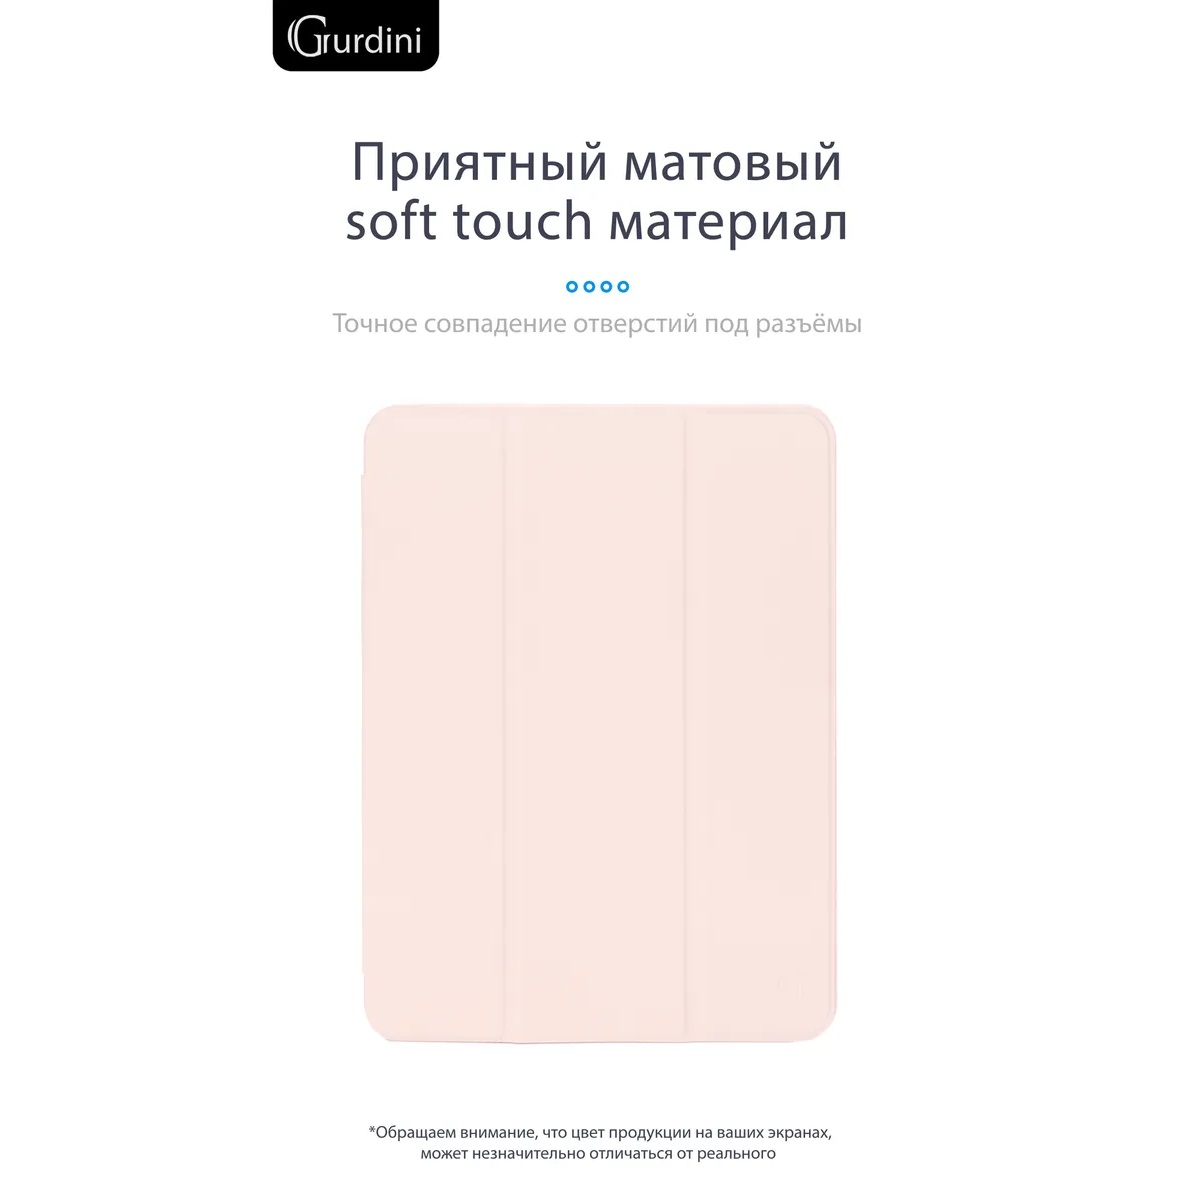 Чехол-книжка Gurdini Milano Series (pen slot) для iPad 10.2 Pink Sand